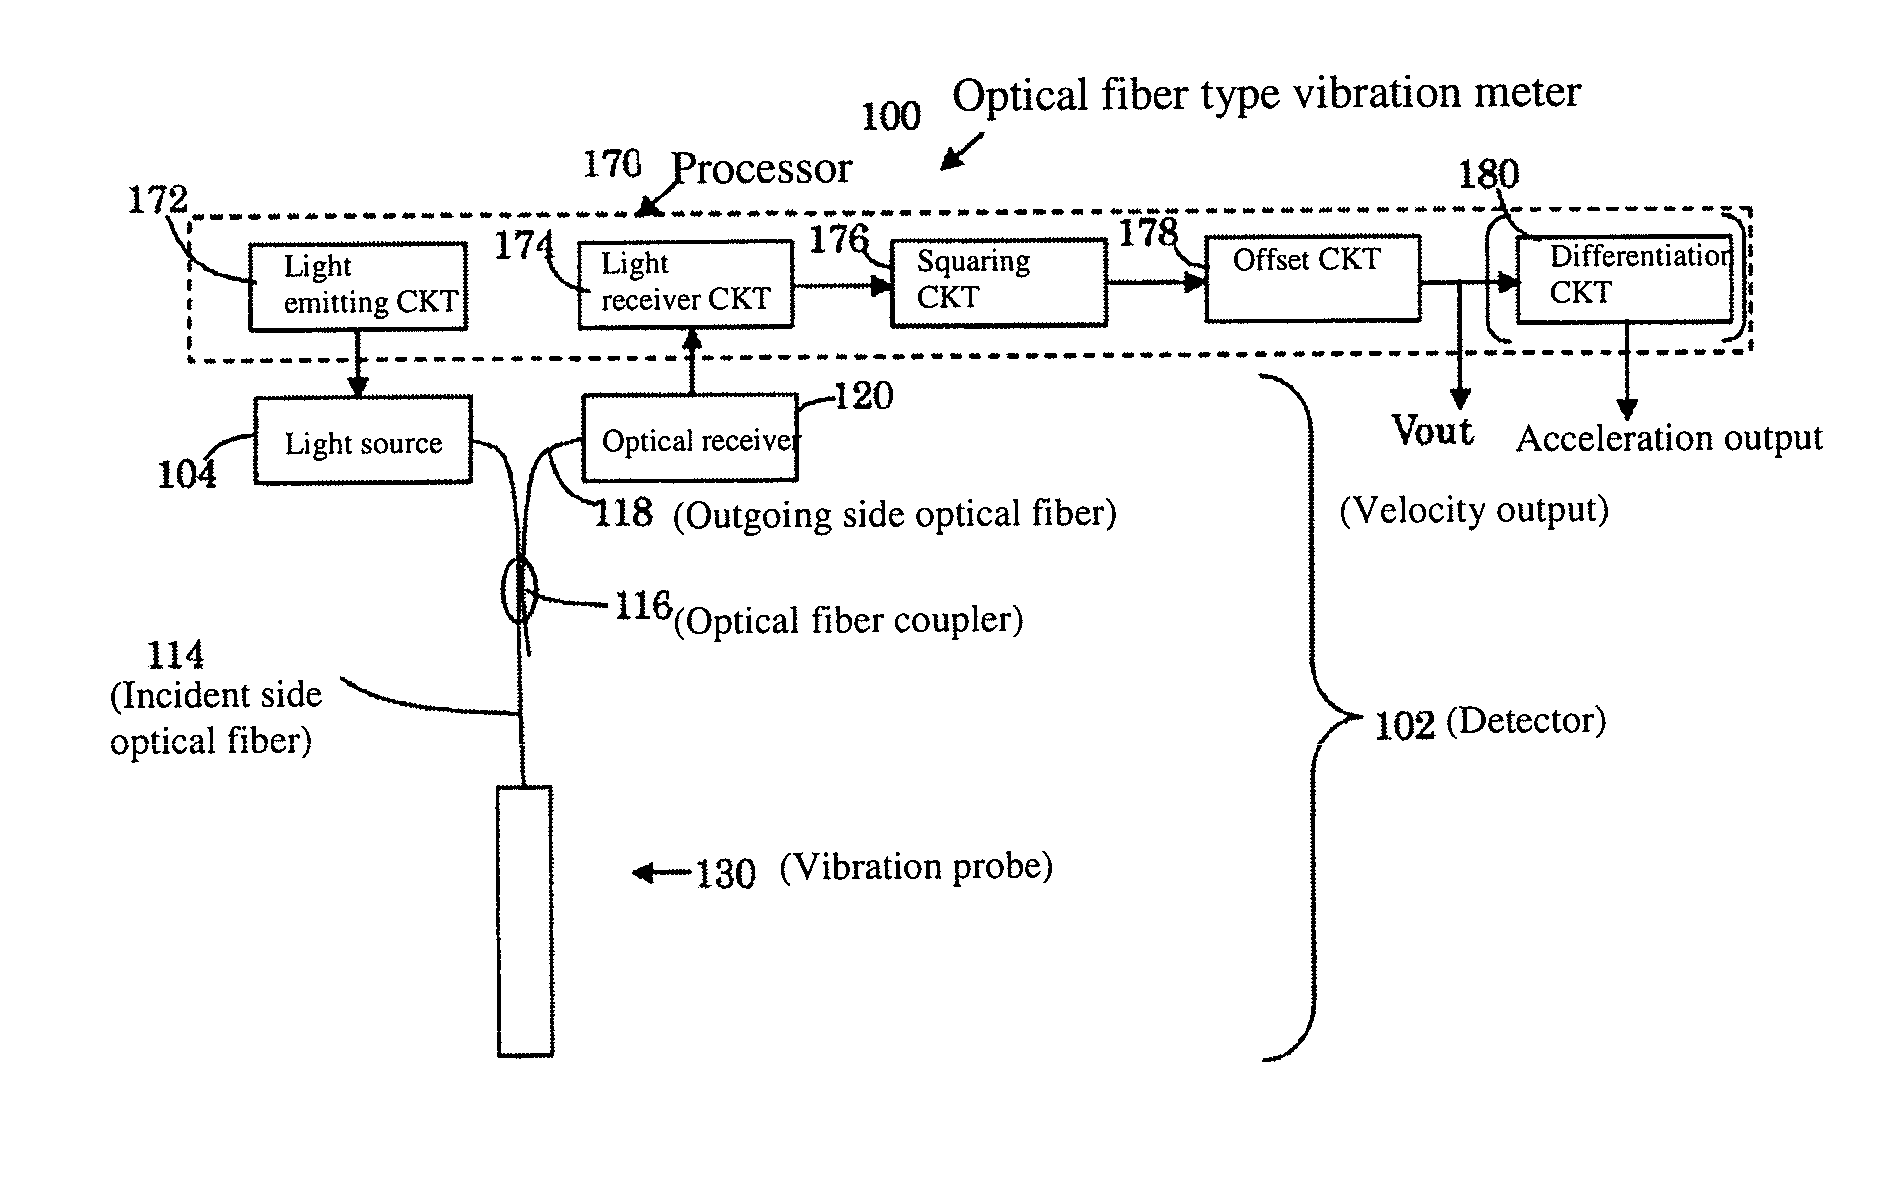 Optical fiber type vibration meter